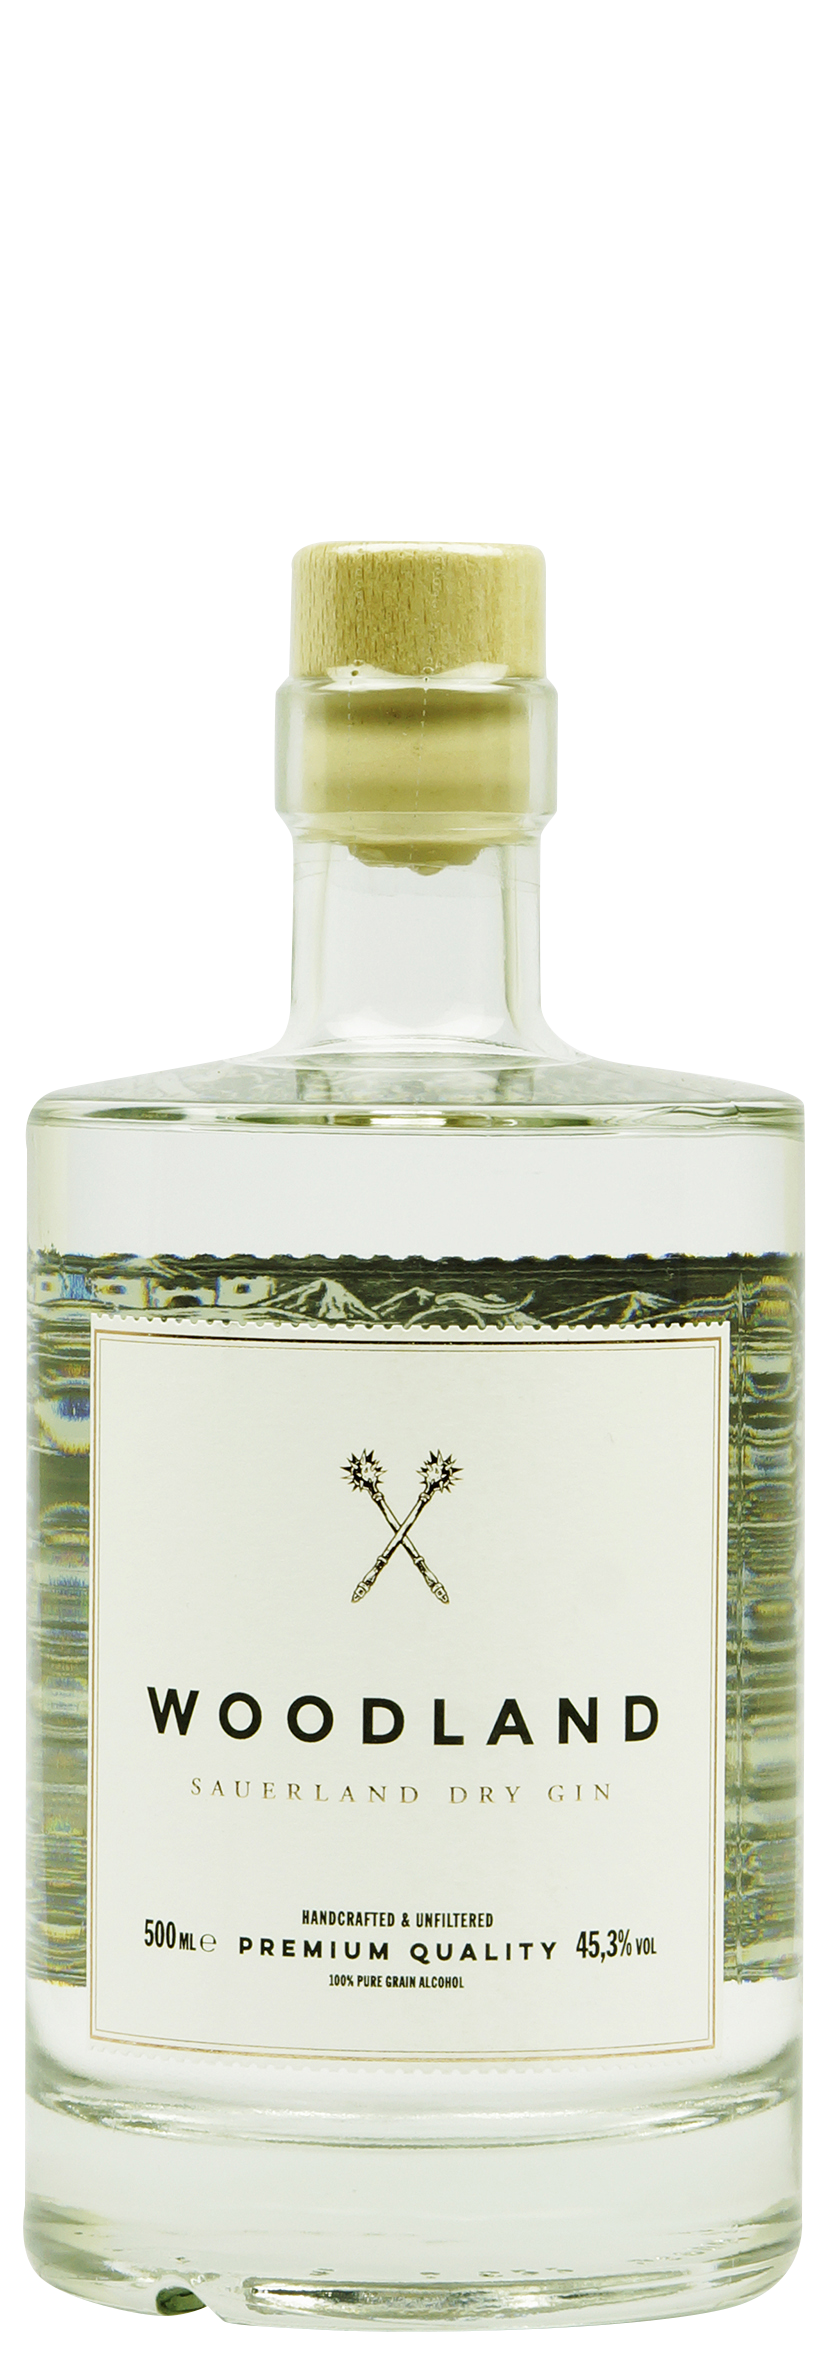 Woodland Sauerland Dry Gin 0